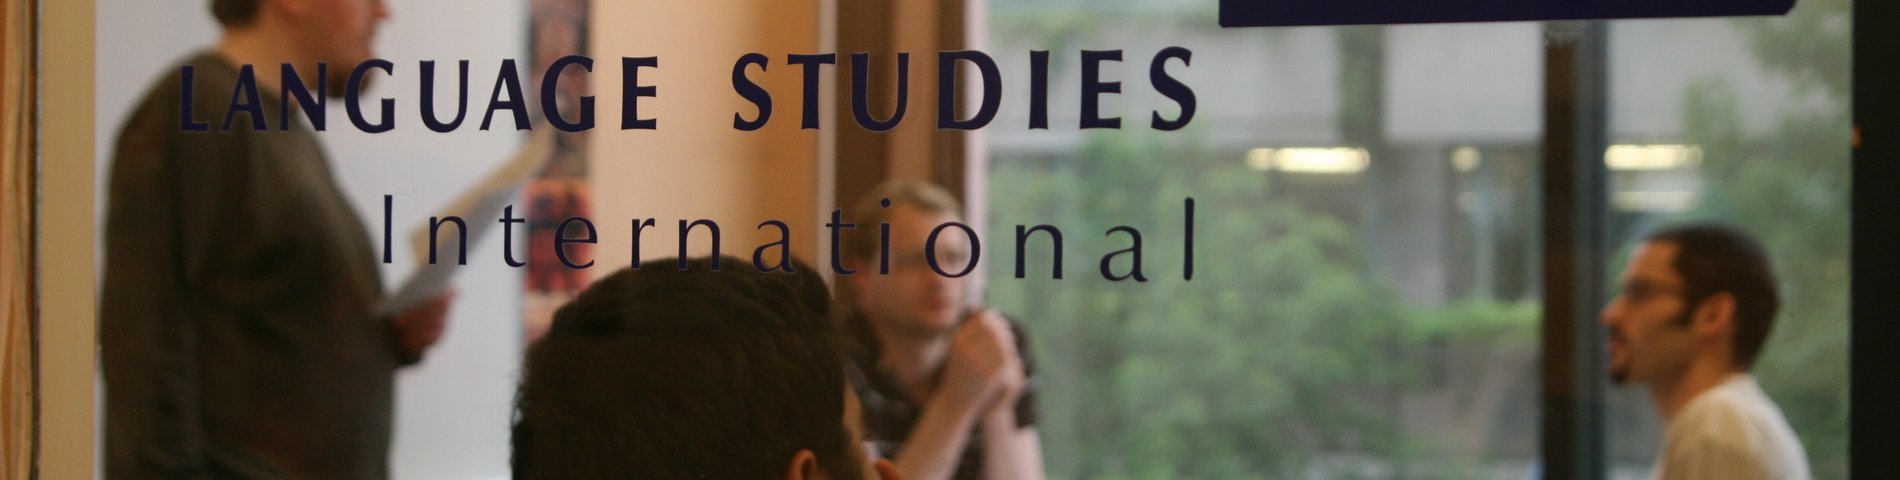 LSI - Language Studies International obrazek 1